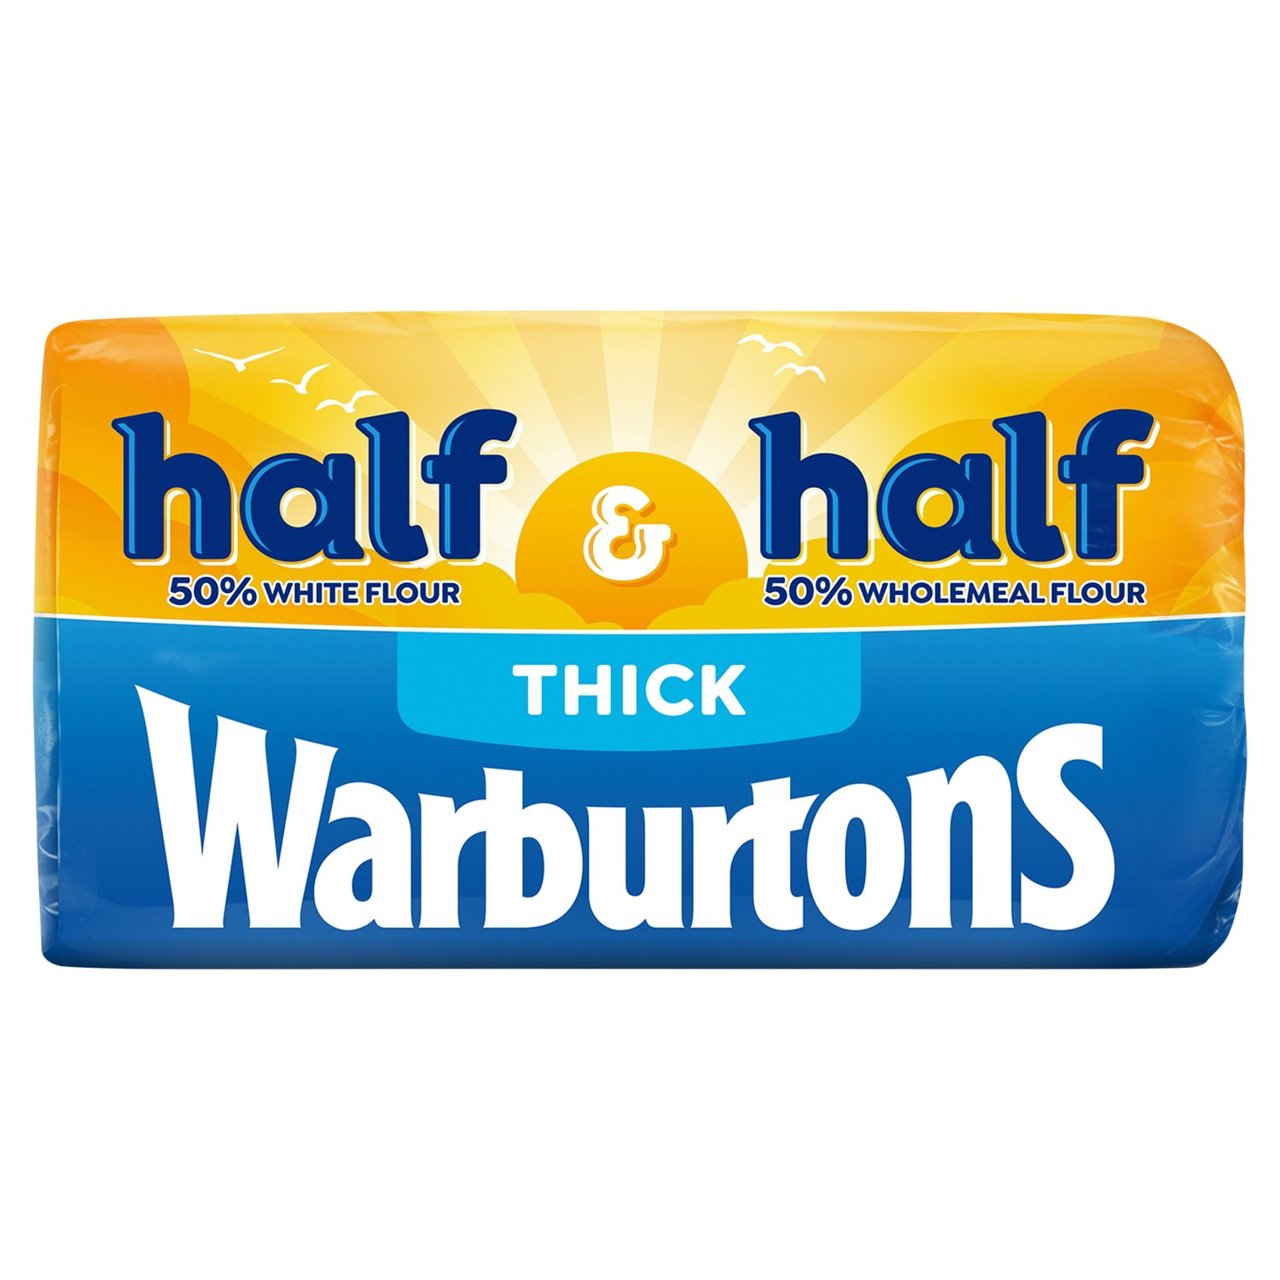 Warburtons 800g Half and Half Thick Loaf